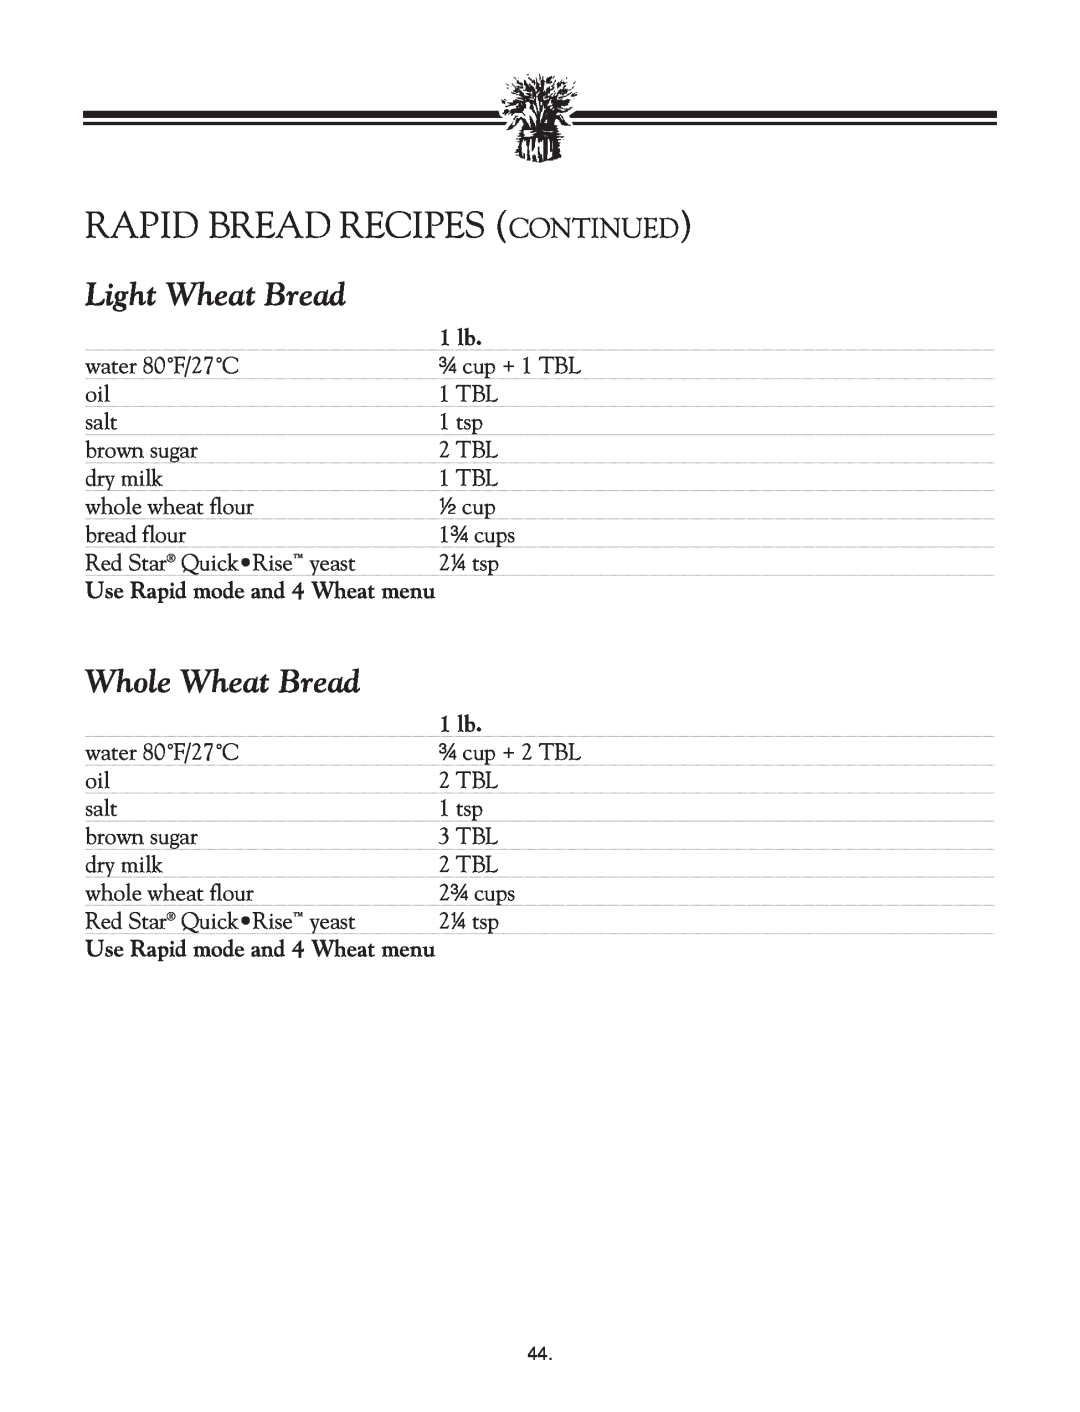 Breadman TR2828G instruction manual Rapid Bread Recipes Continued, Light Wheat Bread, Whole Wheat Bread, water 80˚F/27˚C 